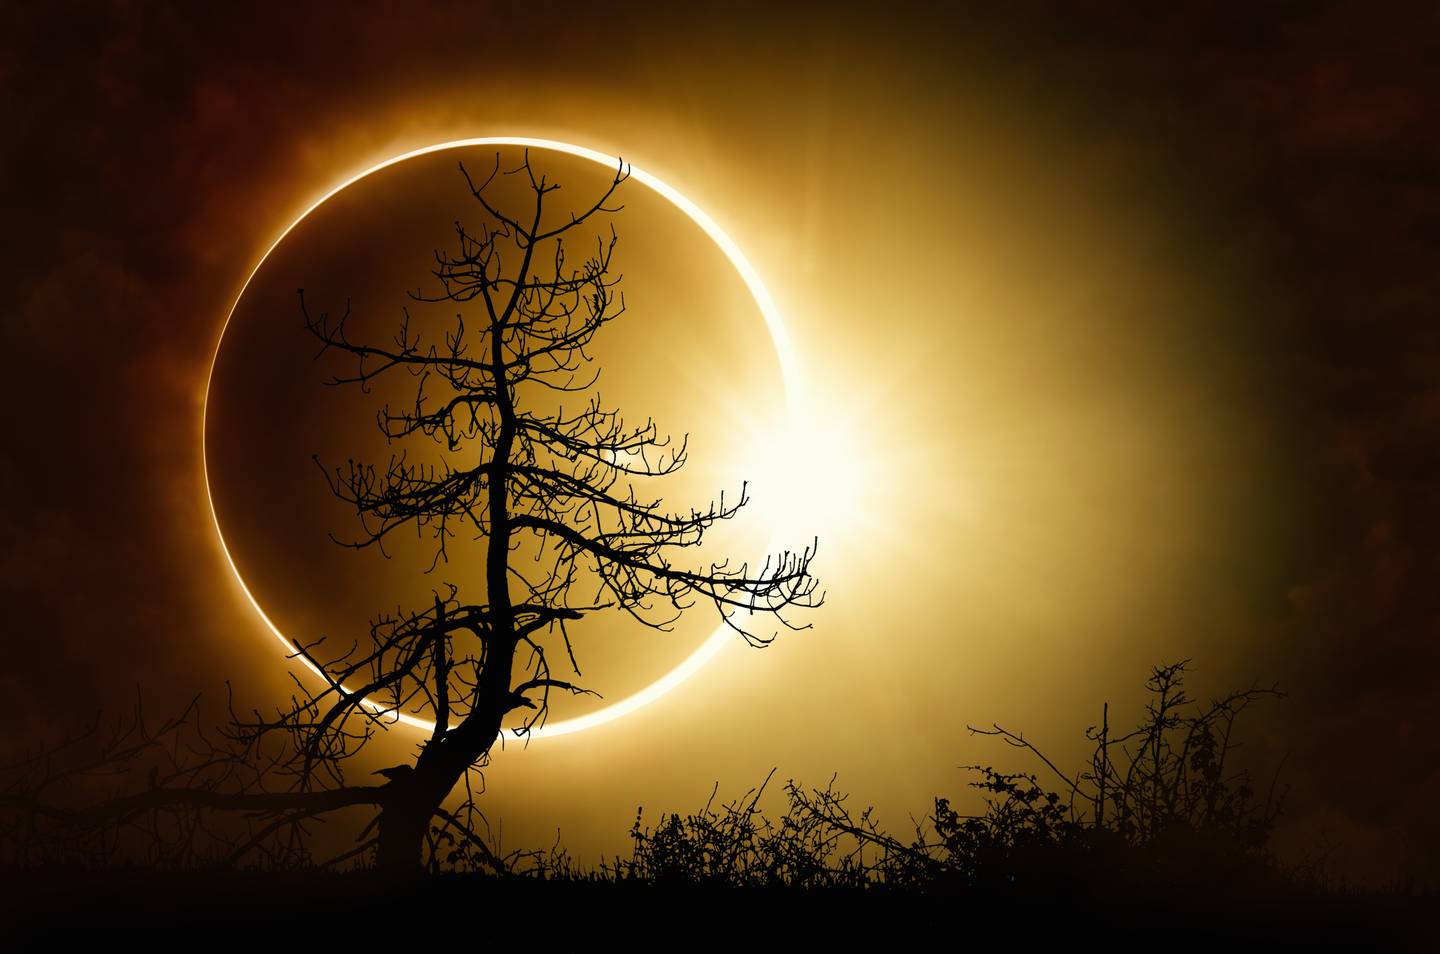 Eclipse anular solar